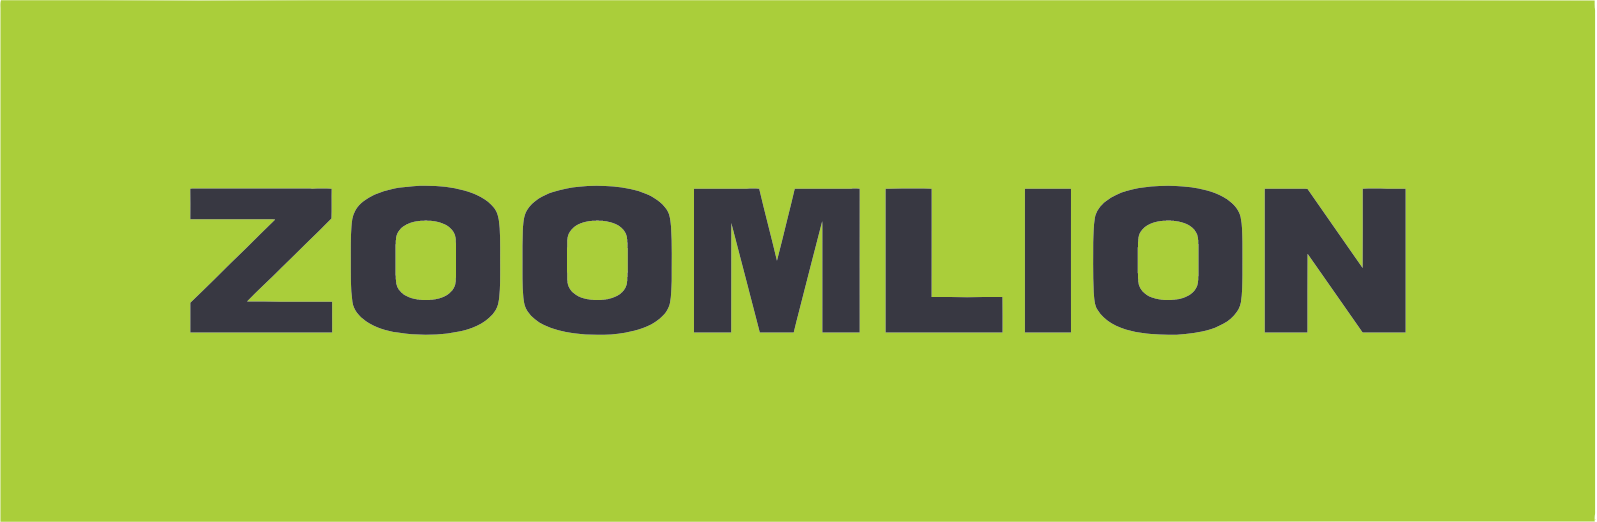 Zoomlion logo large (transparent PNG)